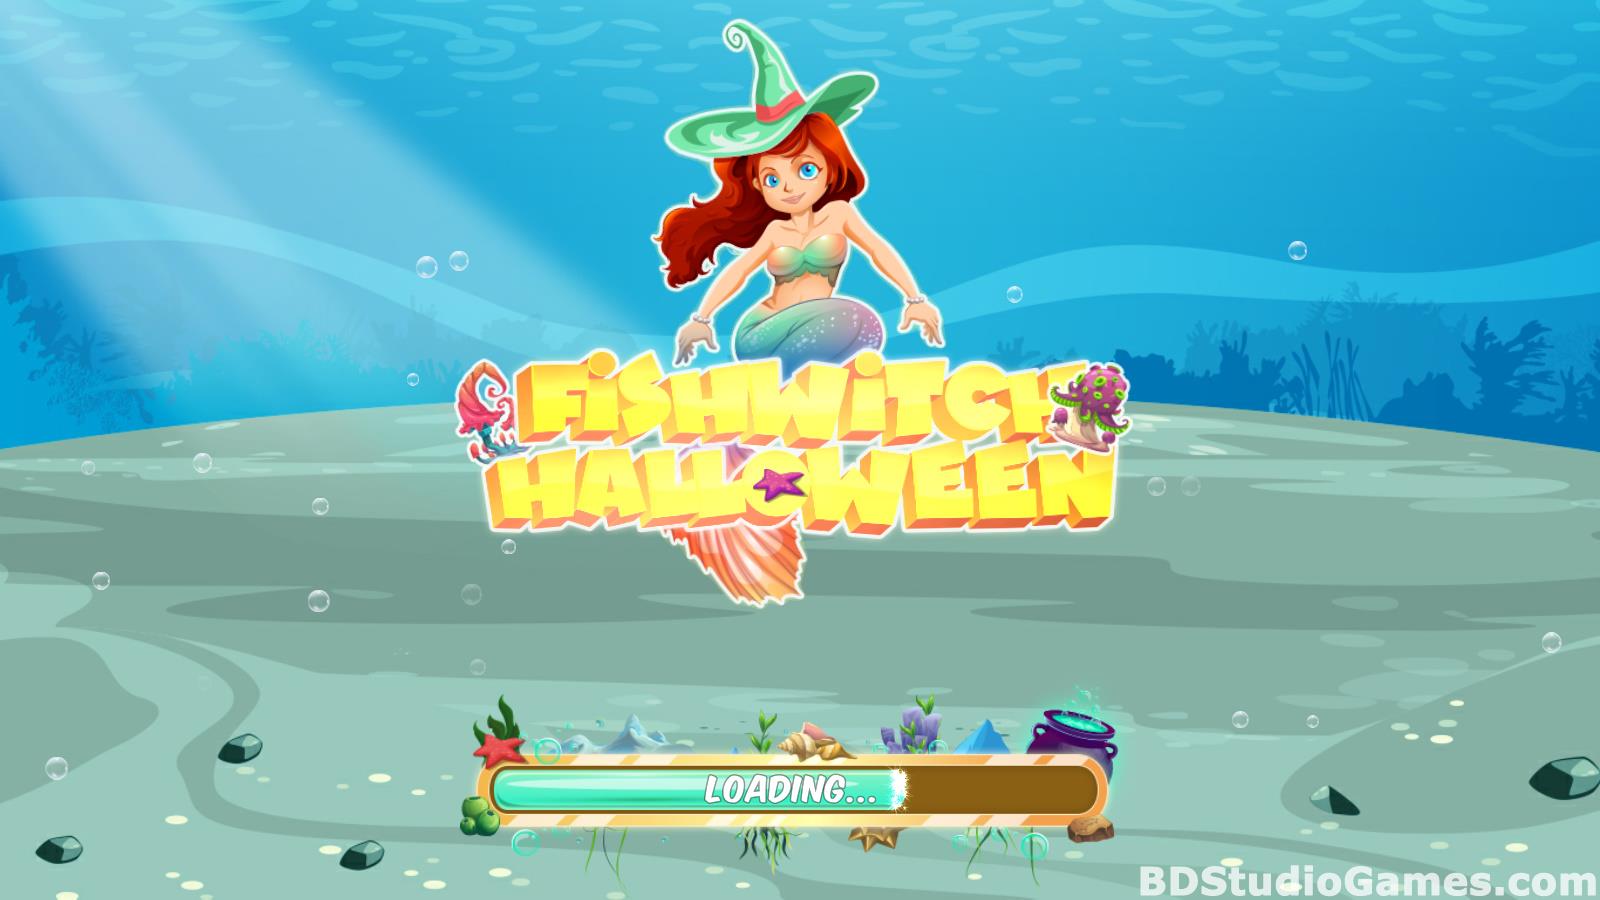 FishWitch Halloween Free Download Screenshots 02